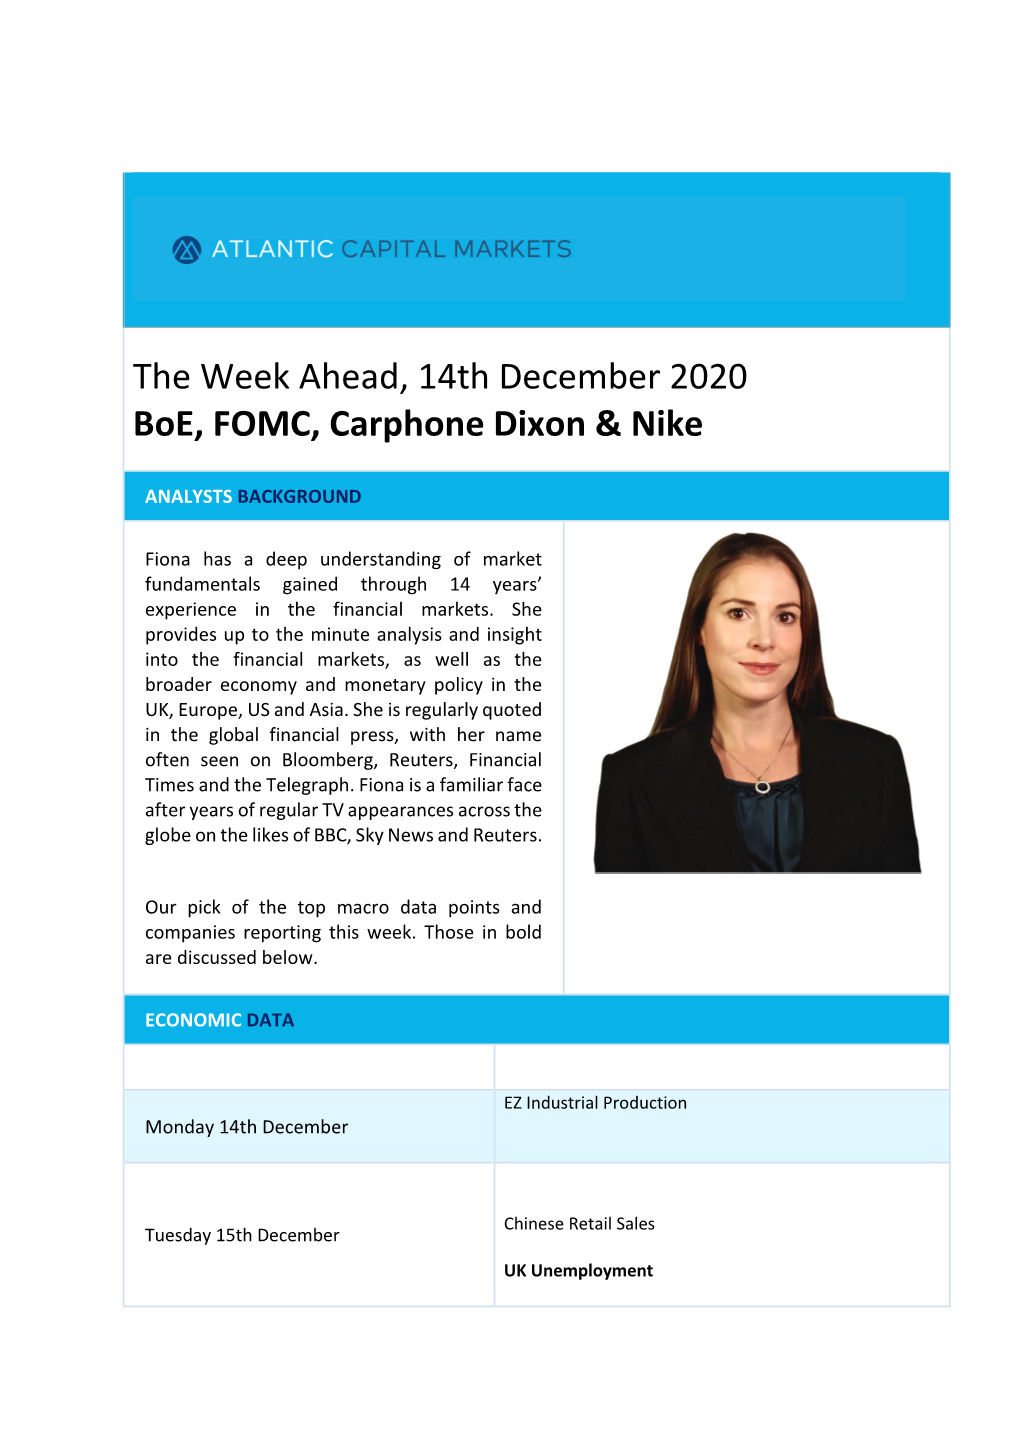 The Week Ahead, 14Th December 2020 Boe, FOMC, Carphone Dixon & Nike